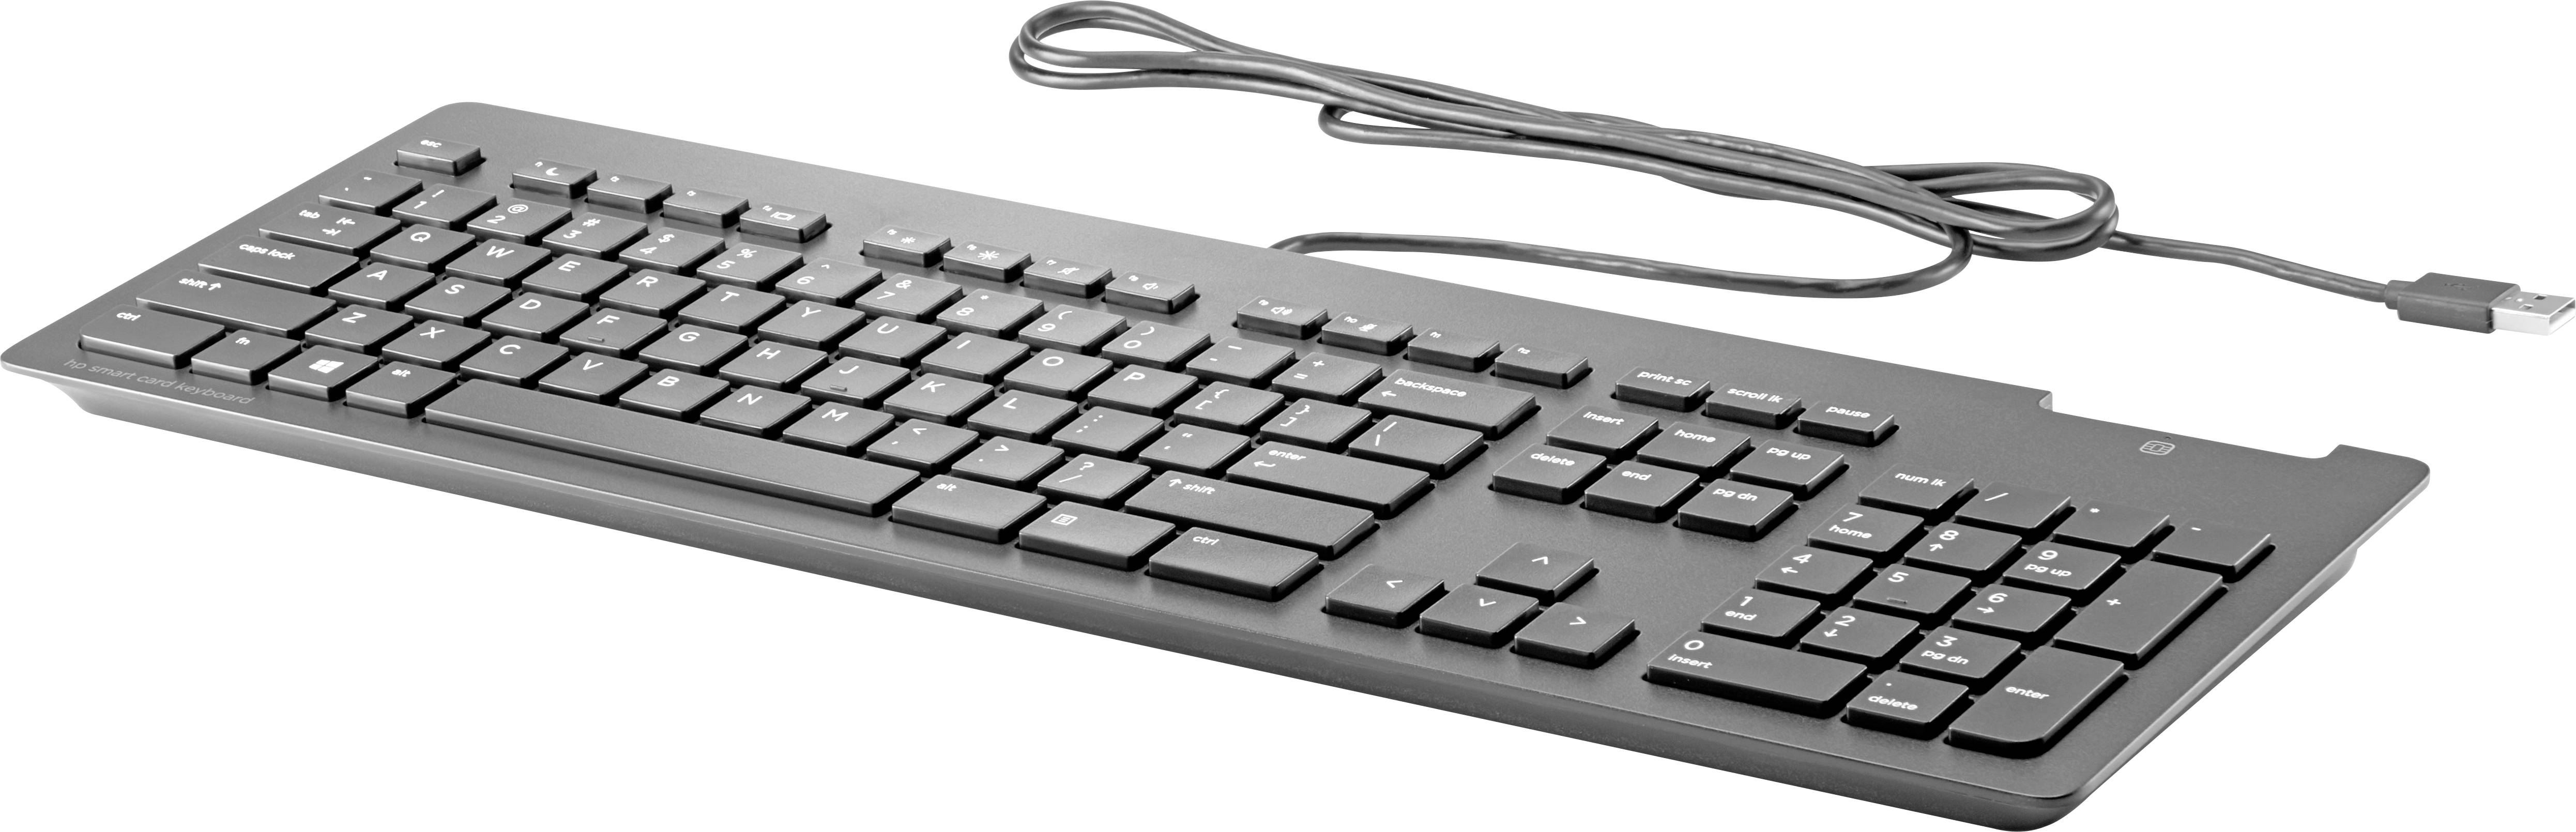 HP USB Bus Slim CCID SmartCard Keyboard